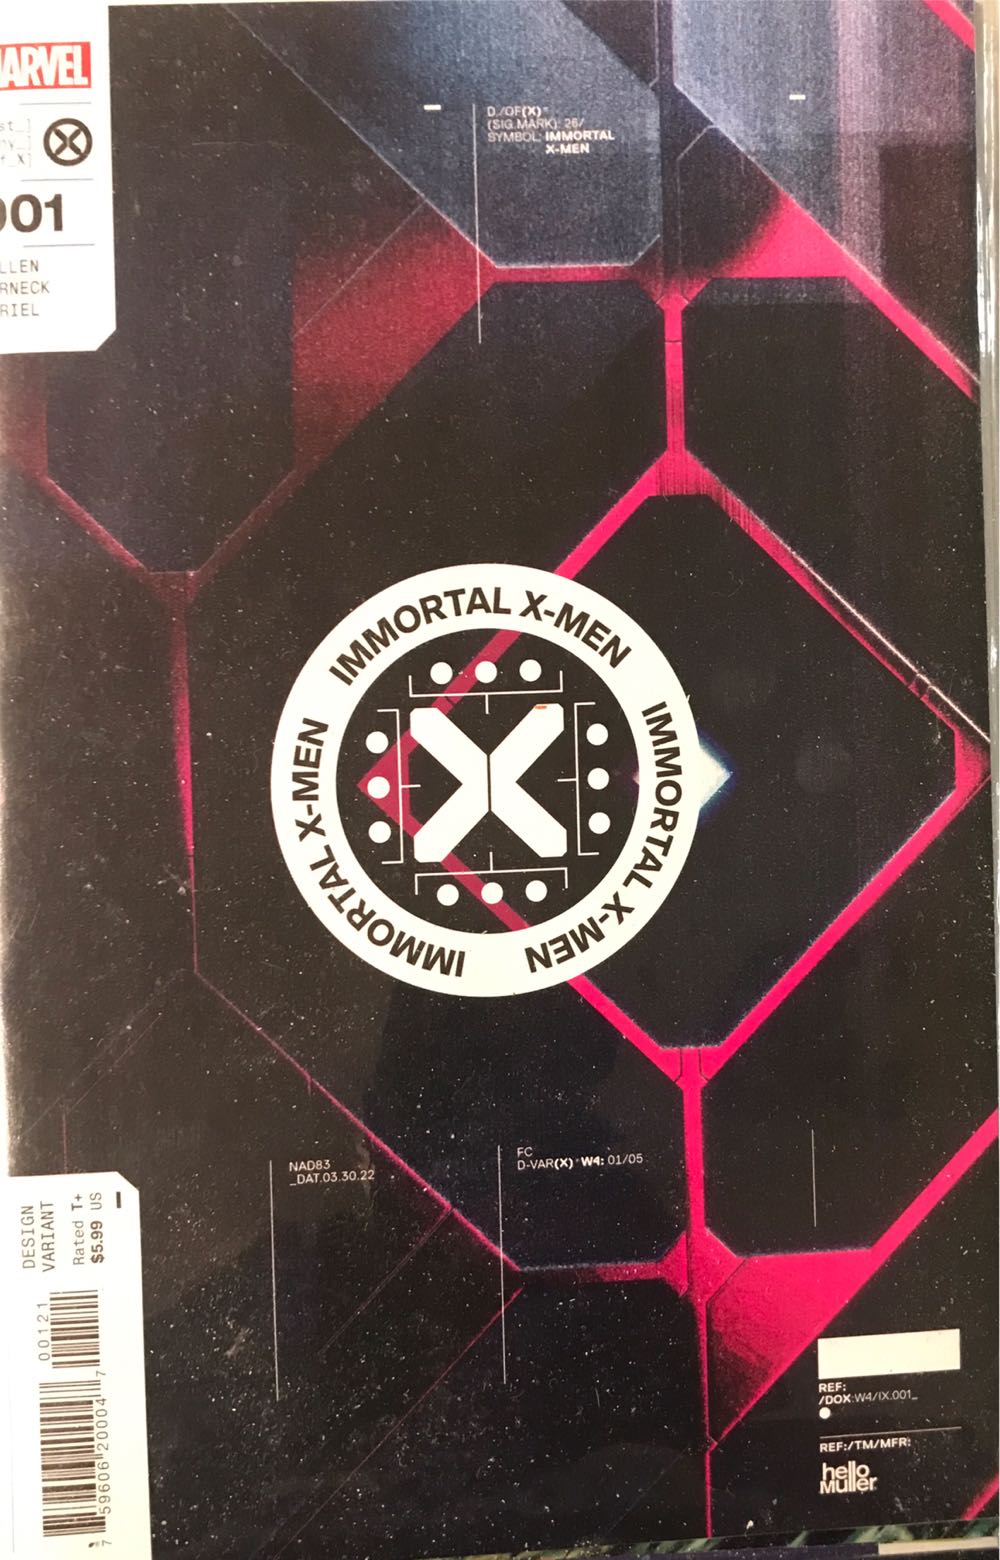 Immortal X-Men #1 - Marvel Comics (1 - May 2022) comic book collectible [Barcode 75960620004700111] - Main Image 4